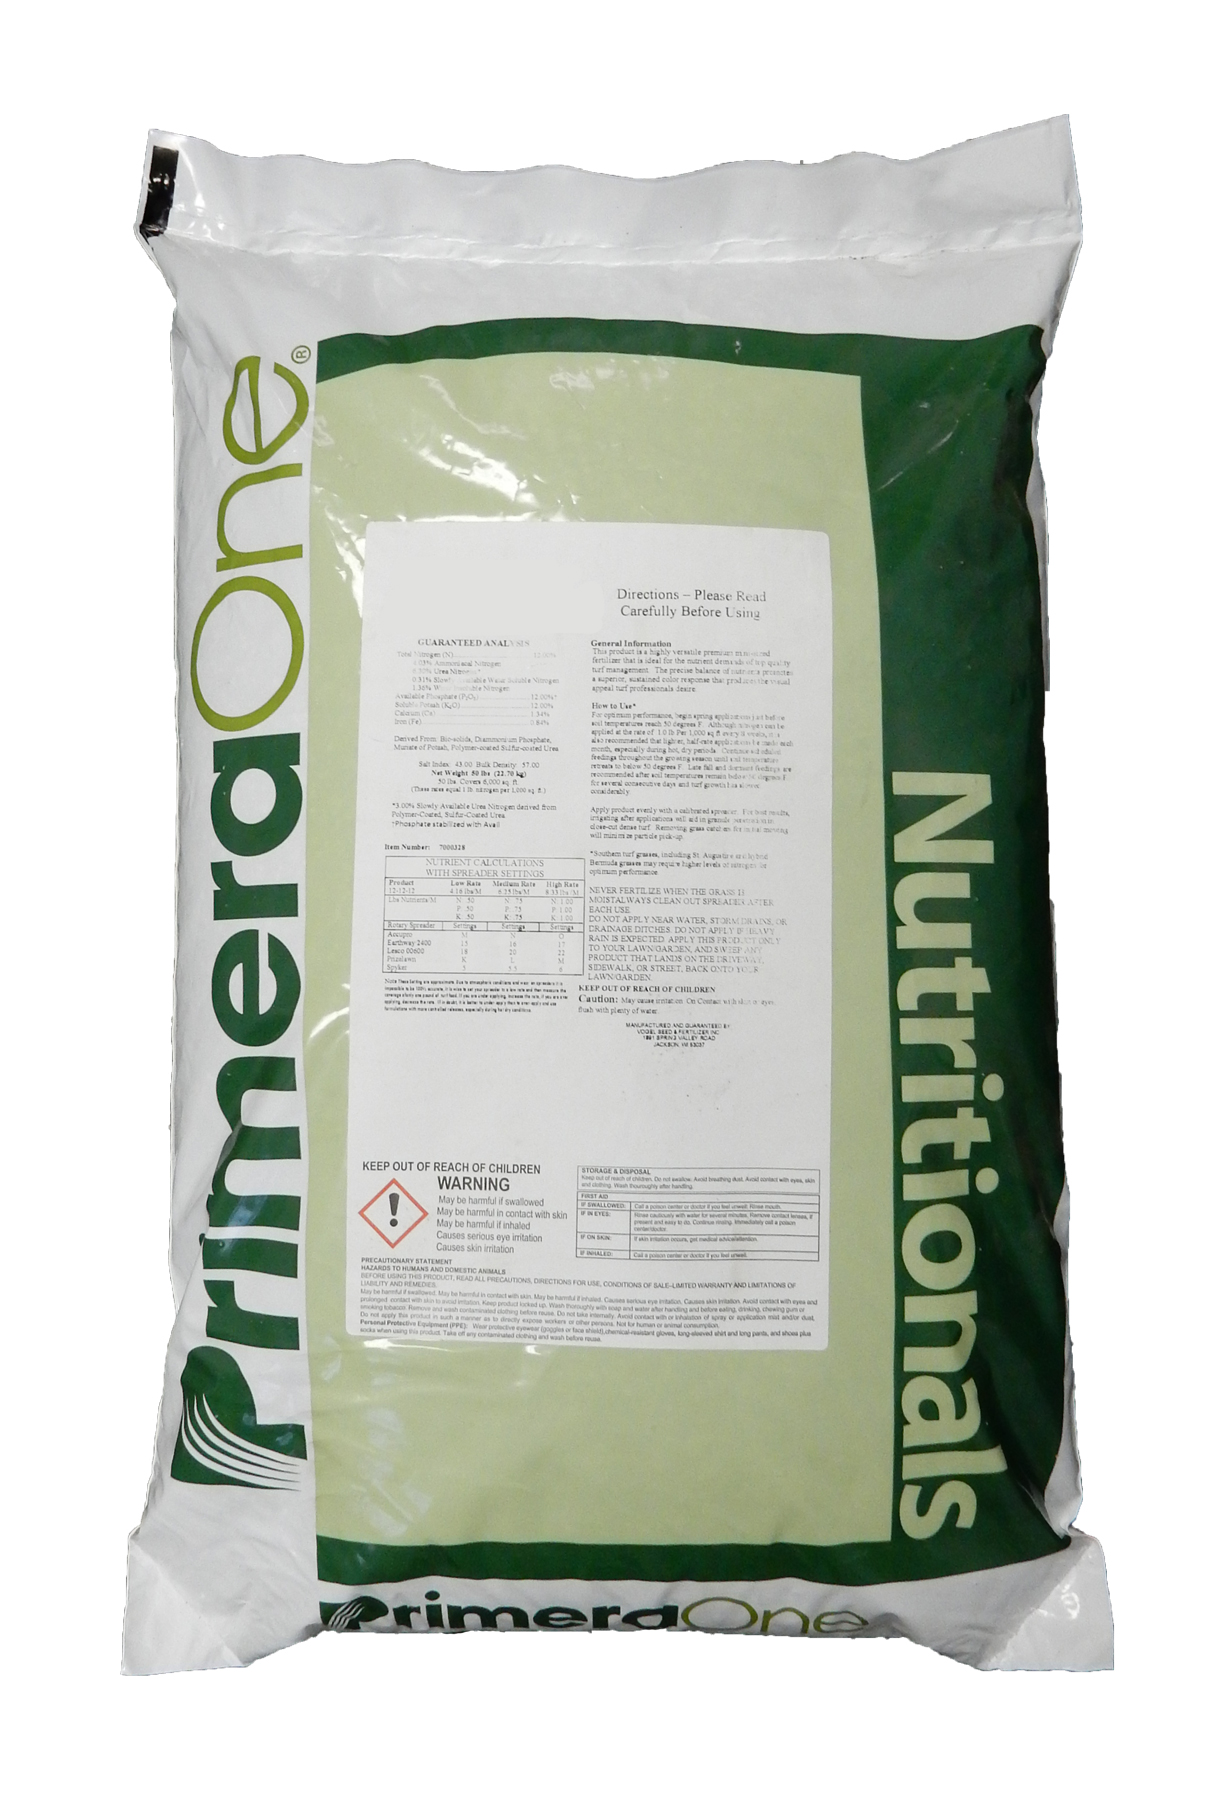 PrimeraOne 17-5-17 All-In-One 25 lb Bag - 80 per pallet - Water Soluble Fertilizer